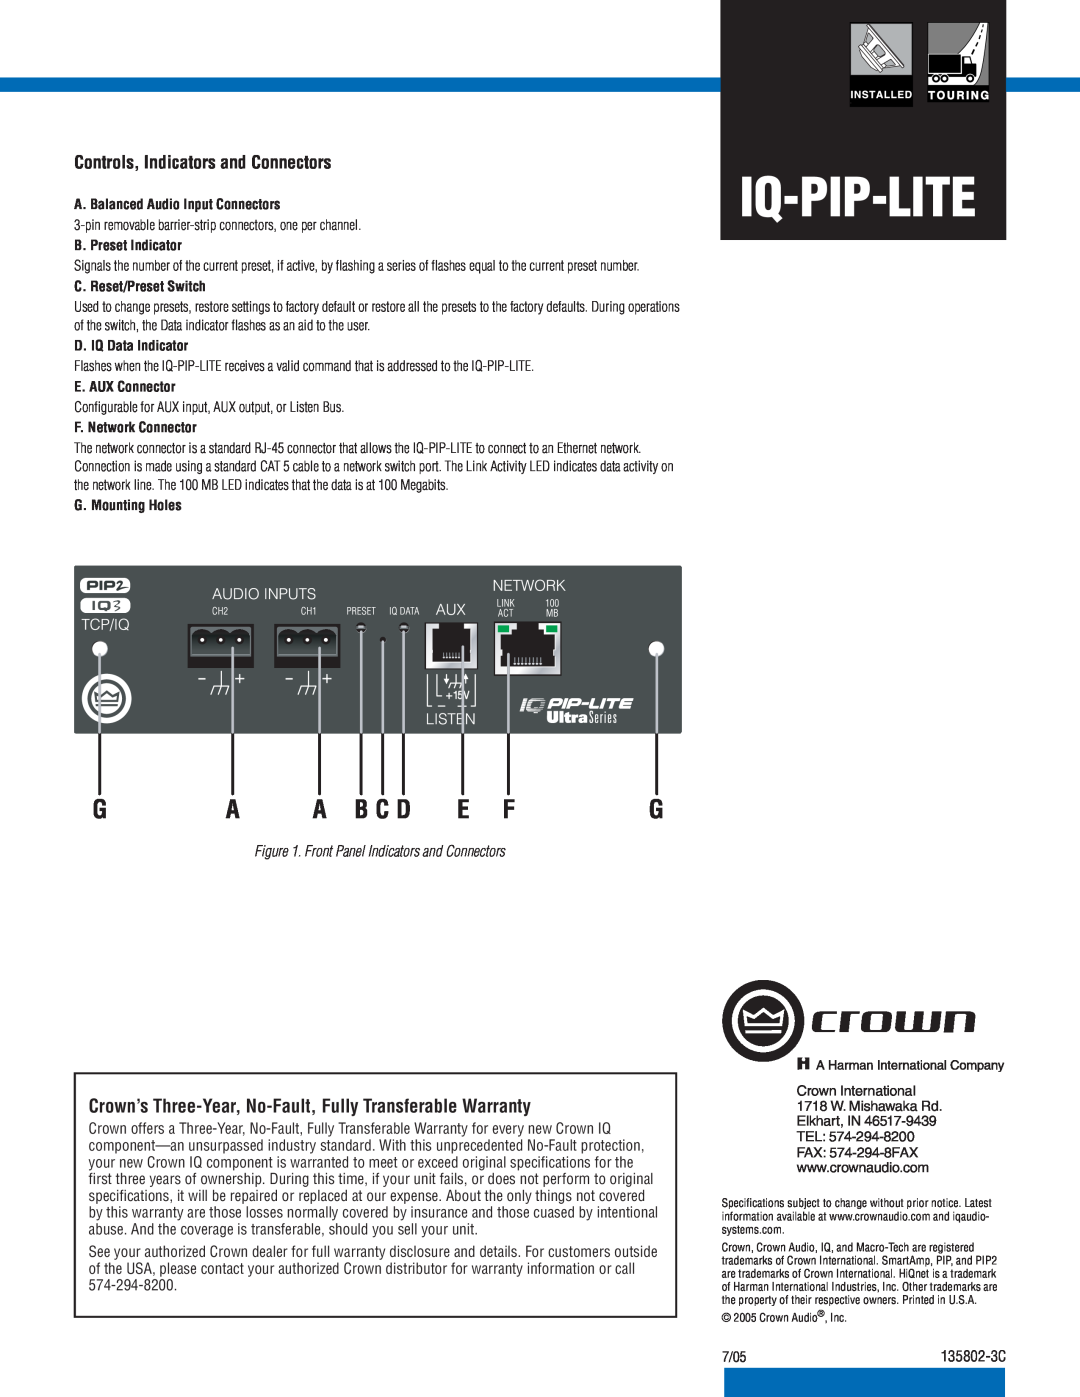 Crown Audio IQ-PIP-LITE Controls, Indicators and Connectors, A. Balanced Audio Input Connectors, B. Preset Indicator 